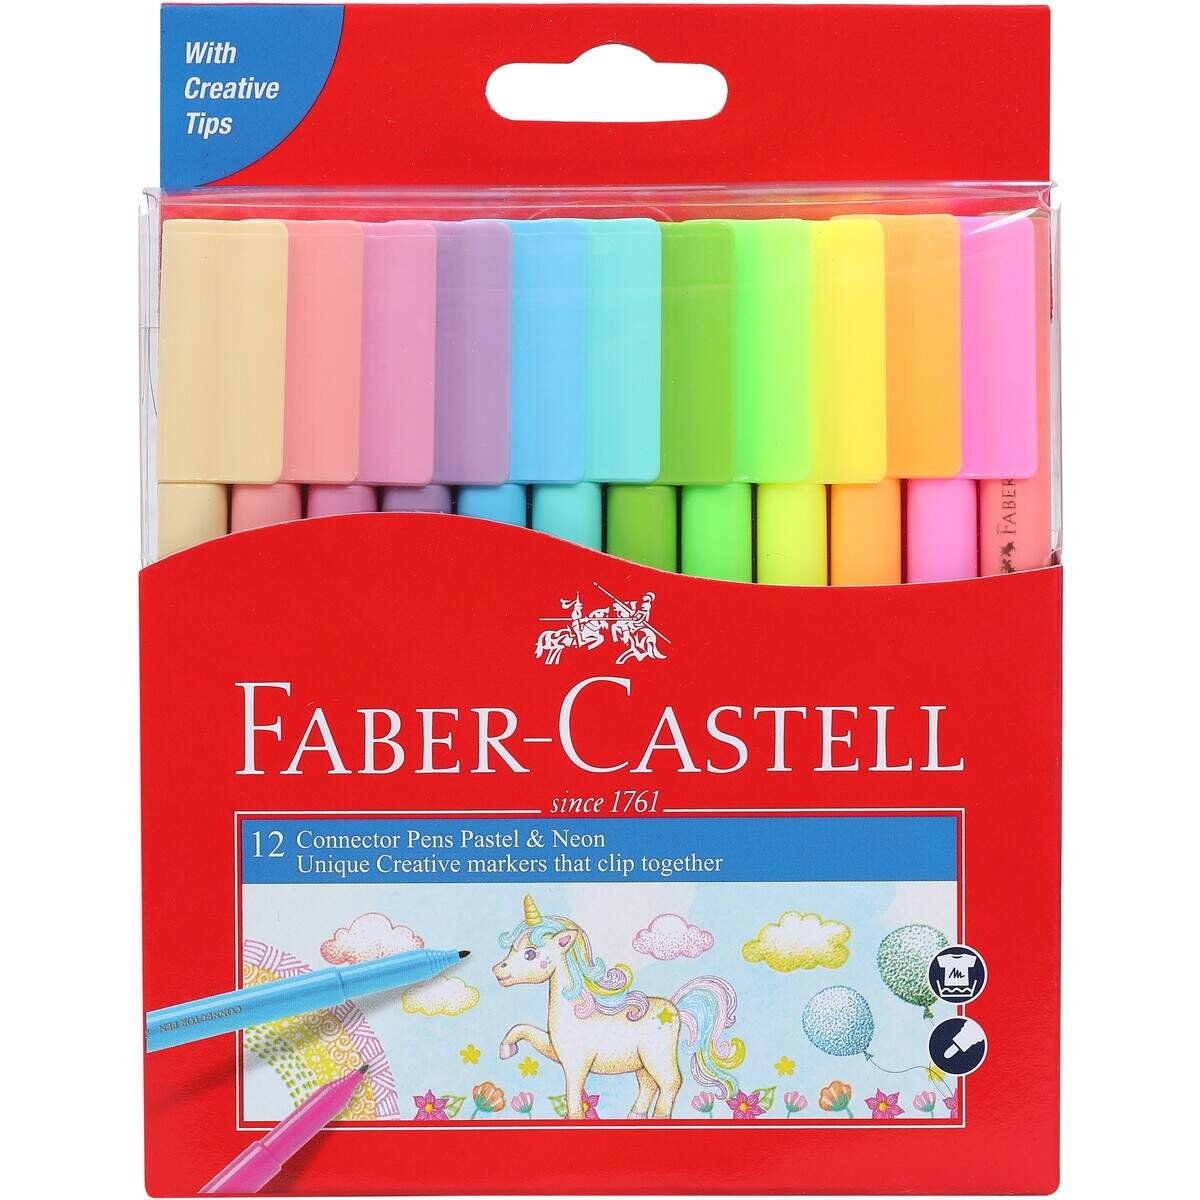 Faber Castell connector colored markers Pastel and Neon || الوان فيبر كاستل موصوبة نيون و باستيل - مكتبة توصيل